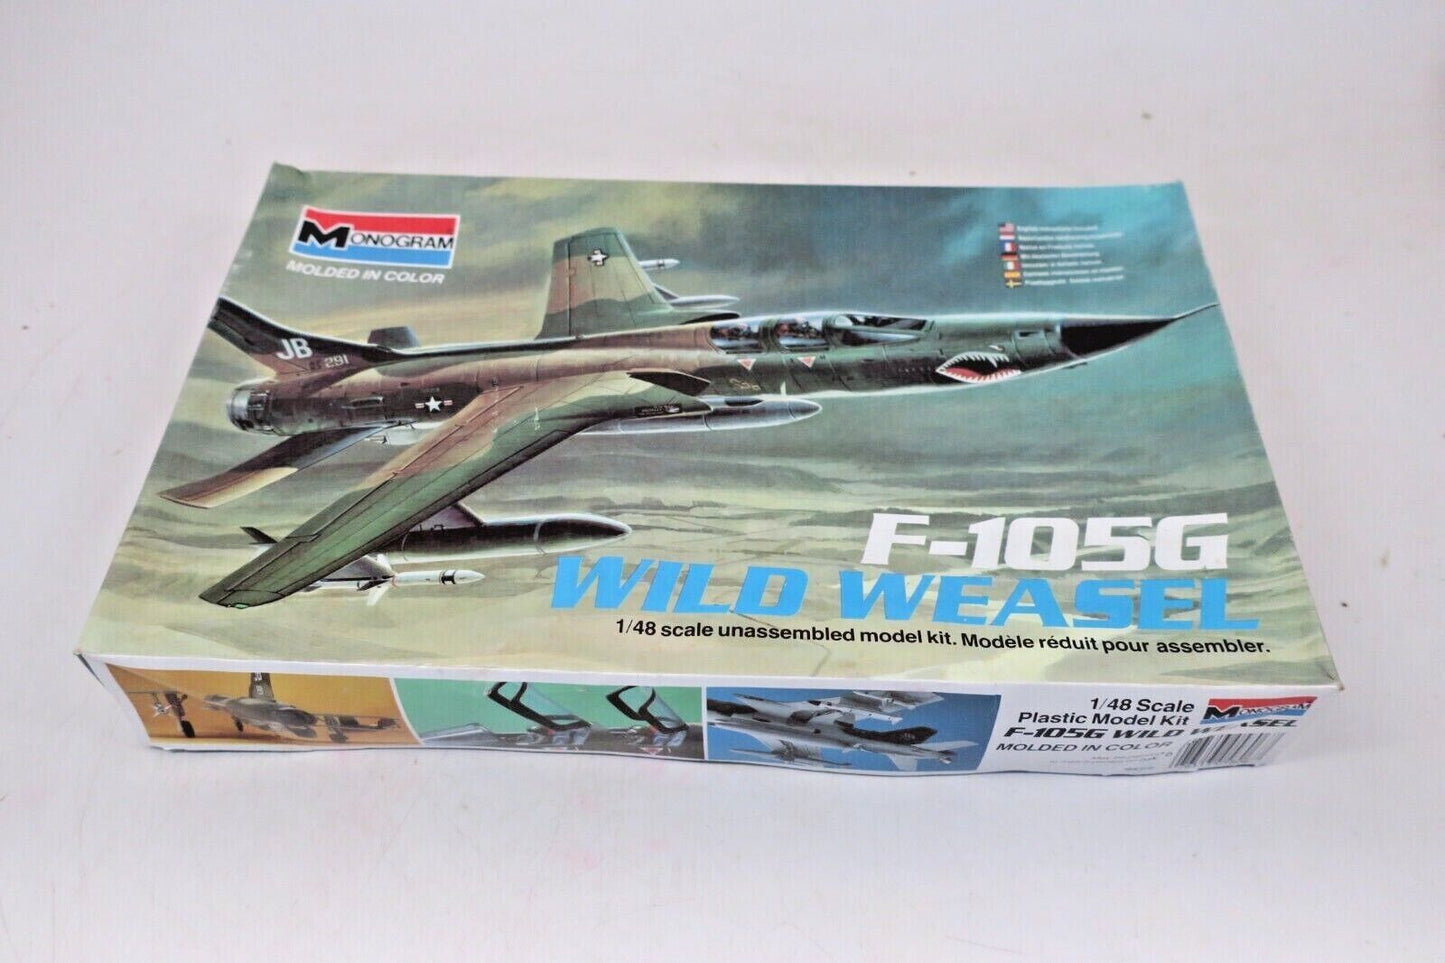 MONOGRAM 1/48 MODEL KIT F-105G WILD WEASEL #5806 AIRPLANE SEALED BOX 1982